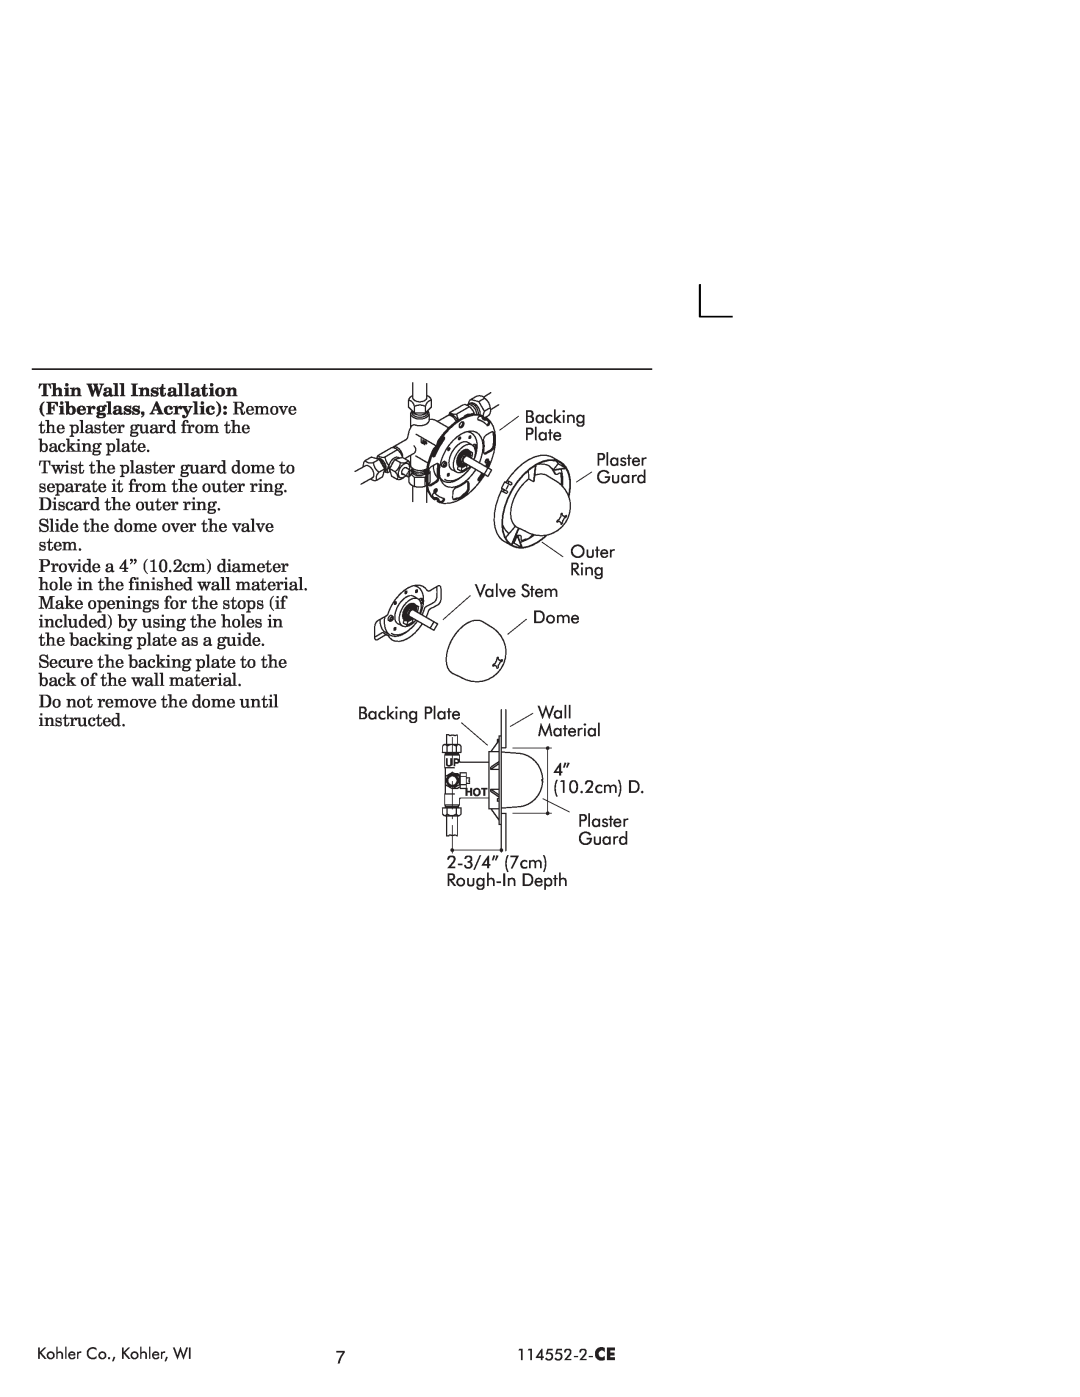 Kohler 114522-2-CE manual Slide the dome over the valve stem 